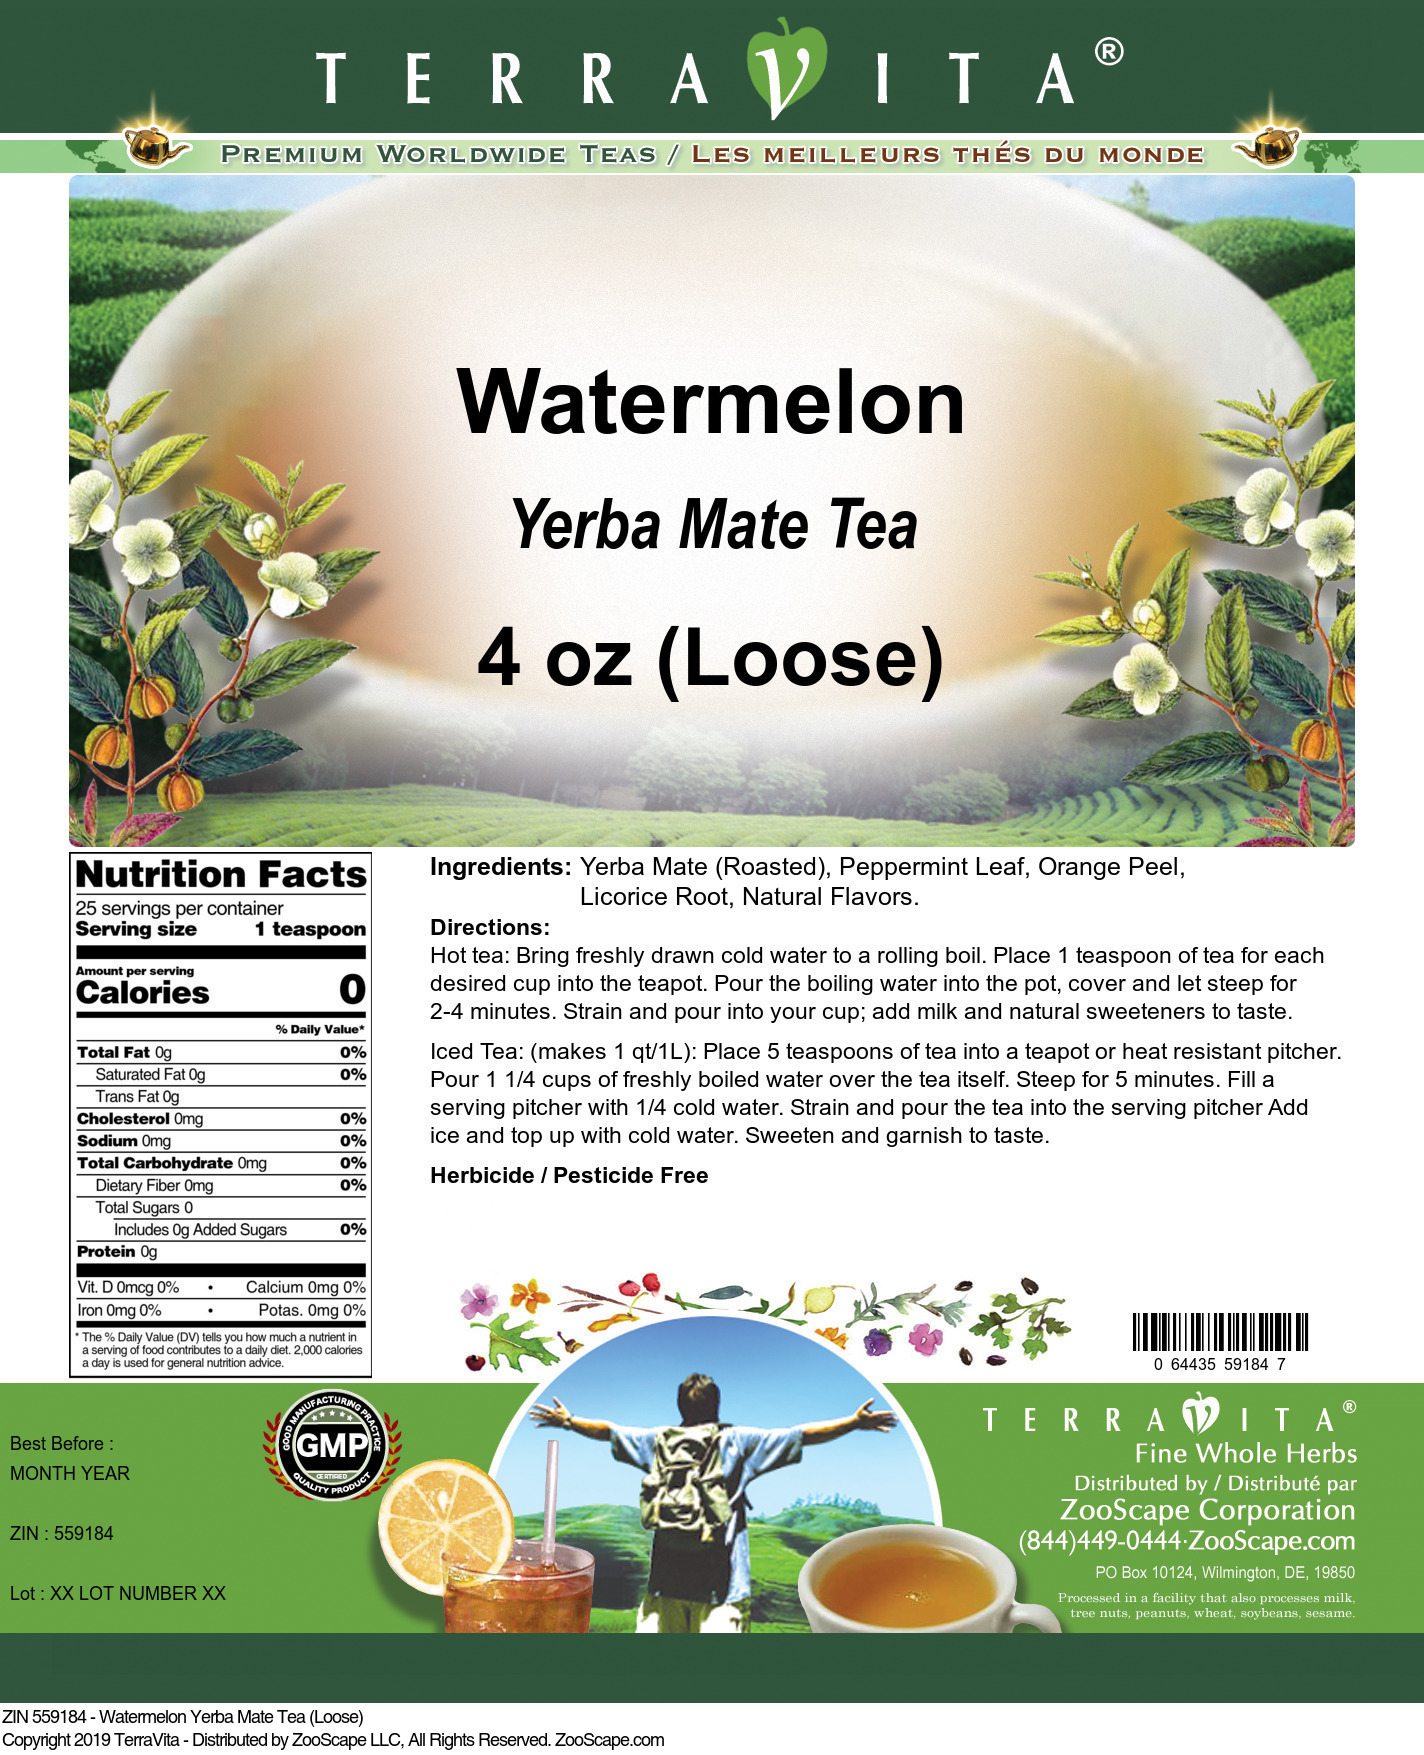 Watermelon Yerba Mate Tea (Loose) - Label